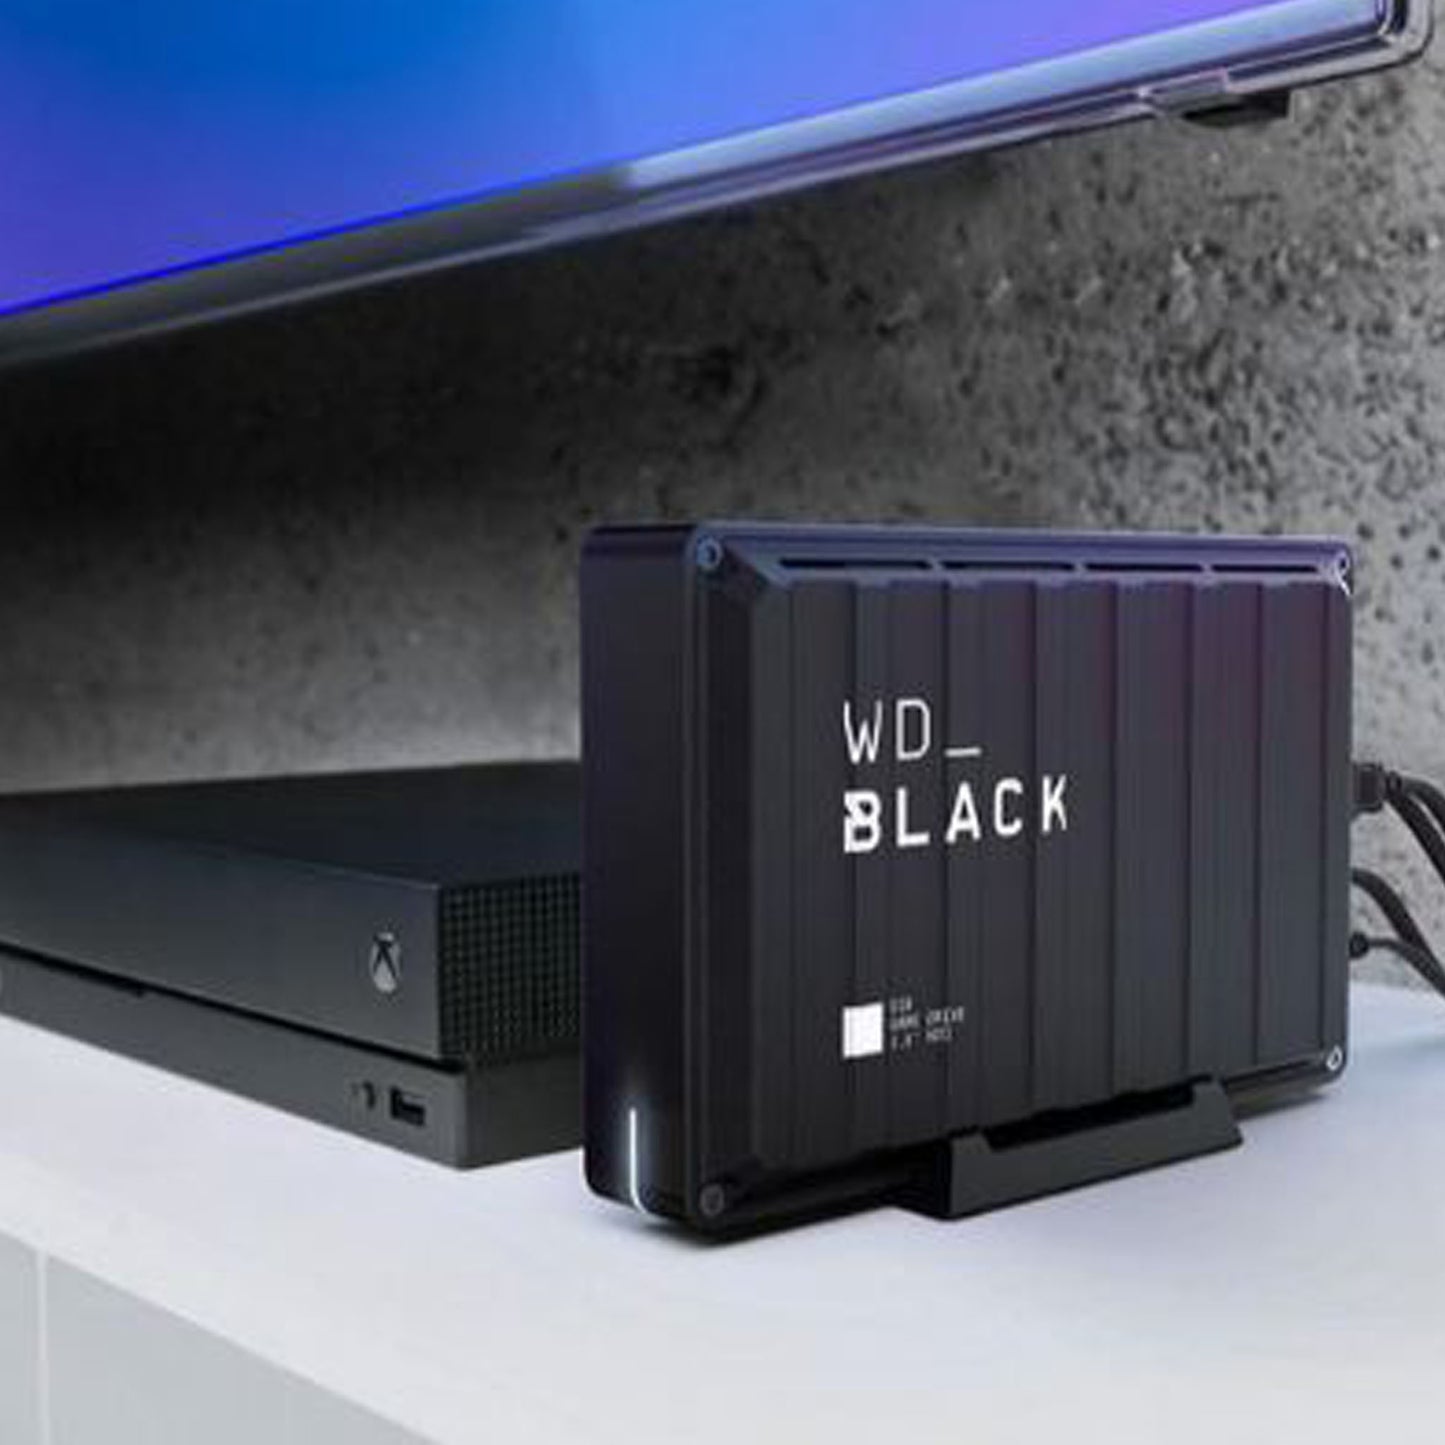 WD _BLACK D10 External Game Drive - 8 TB, Black